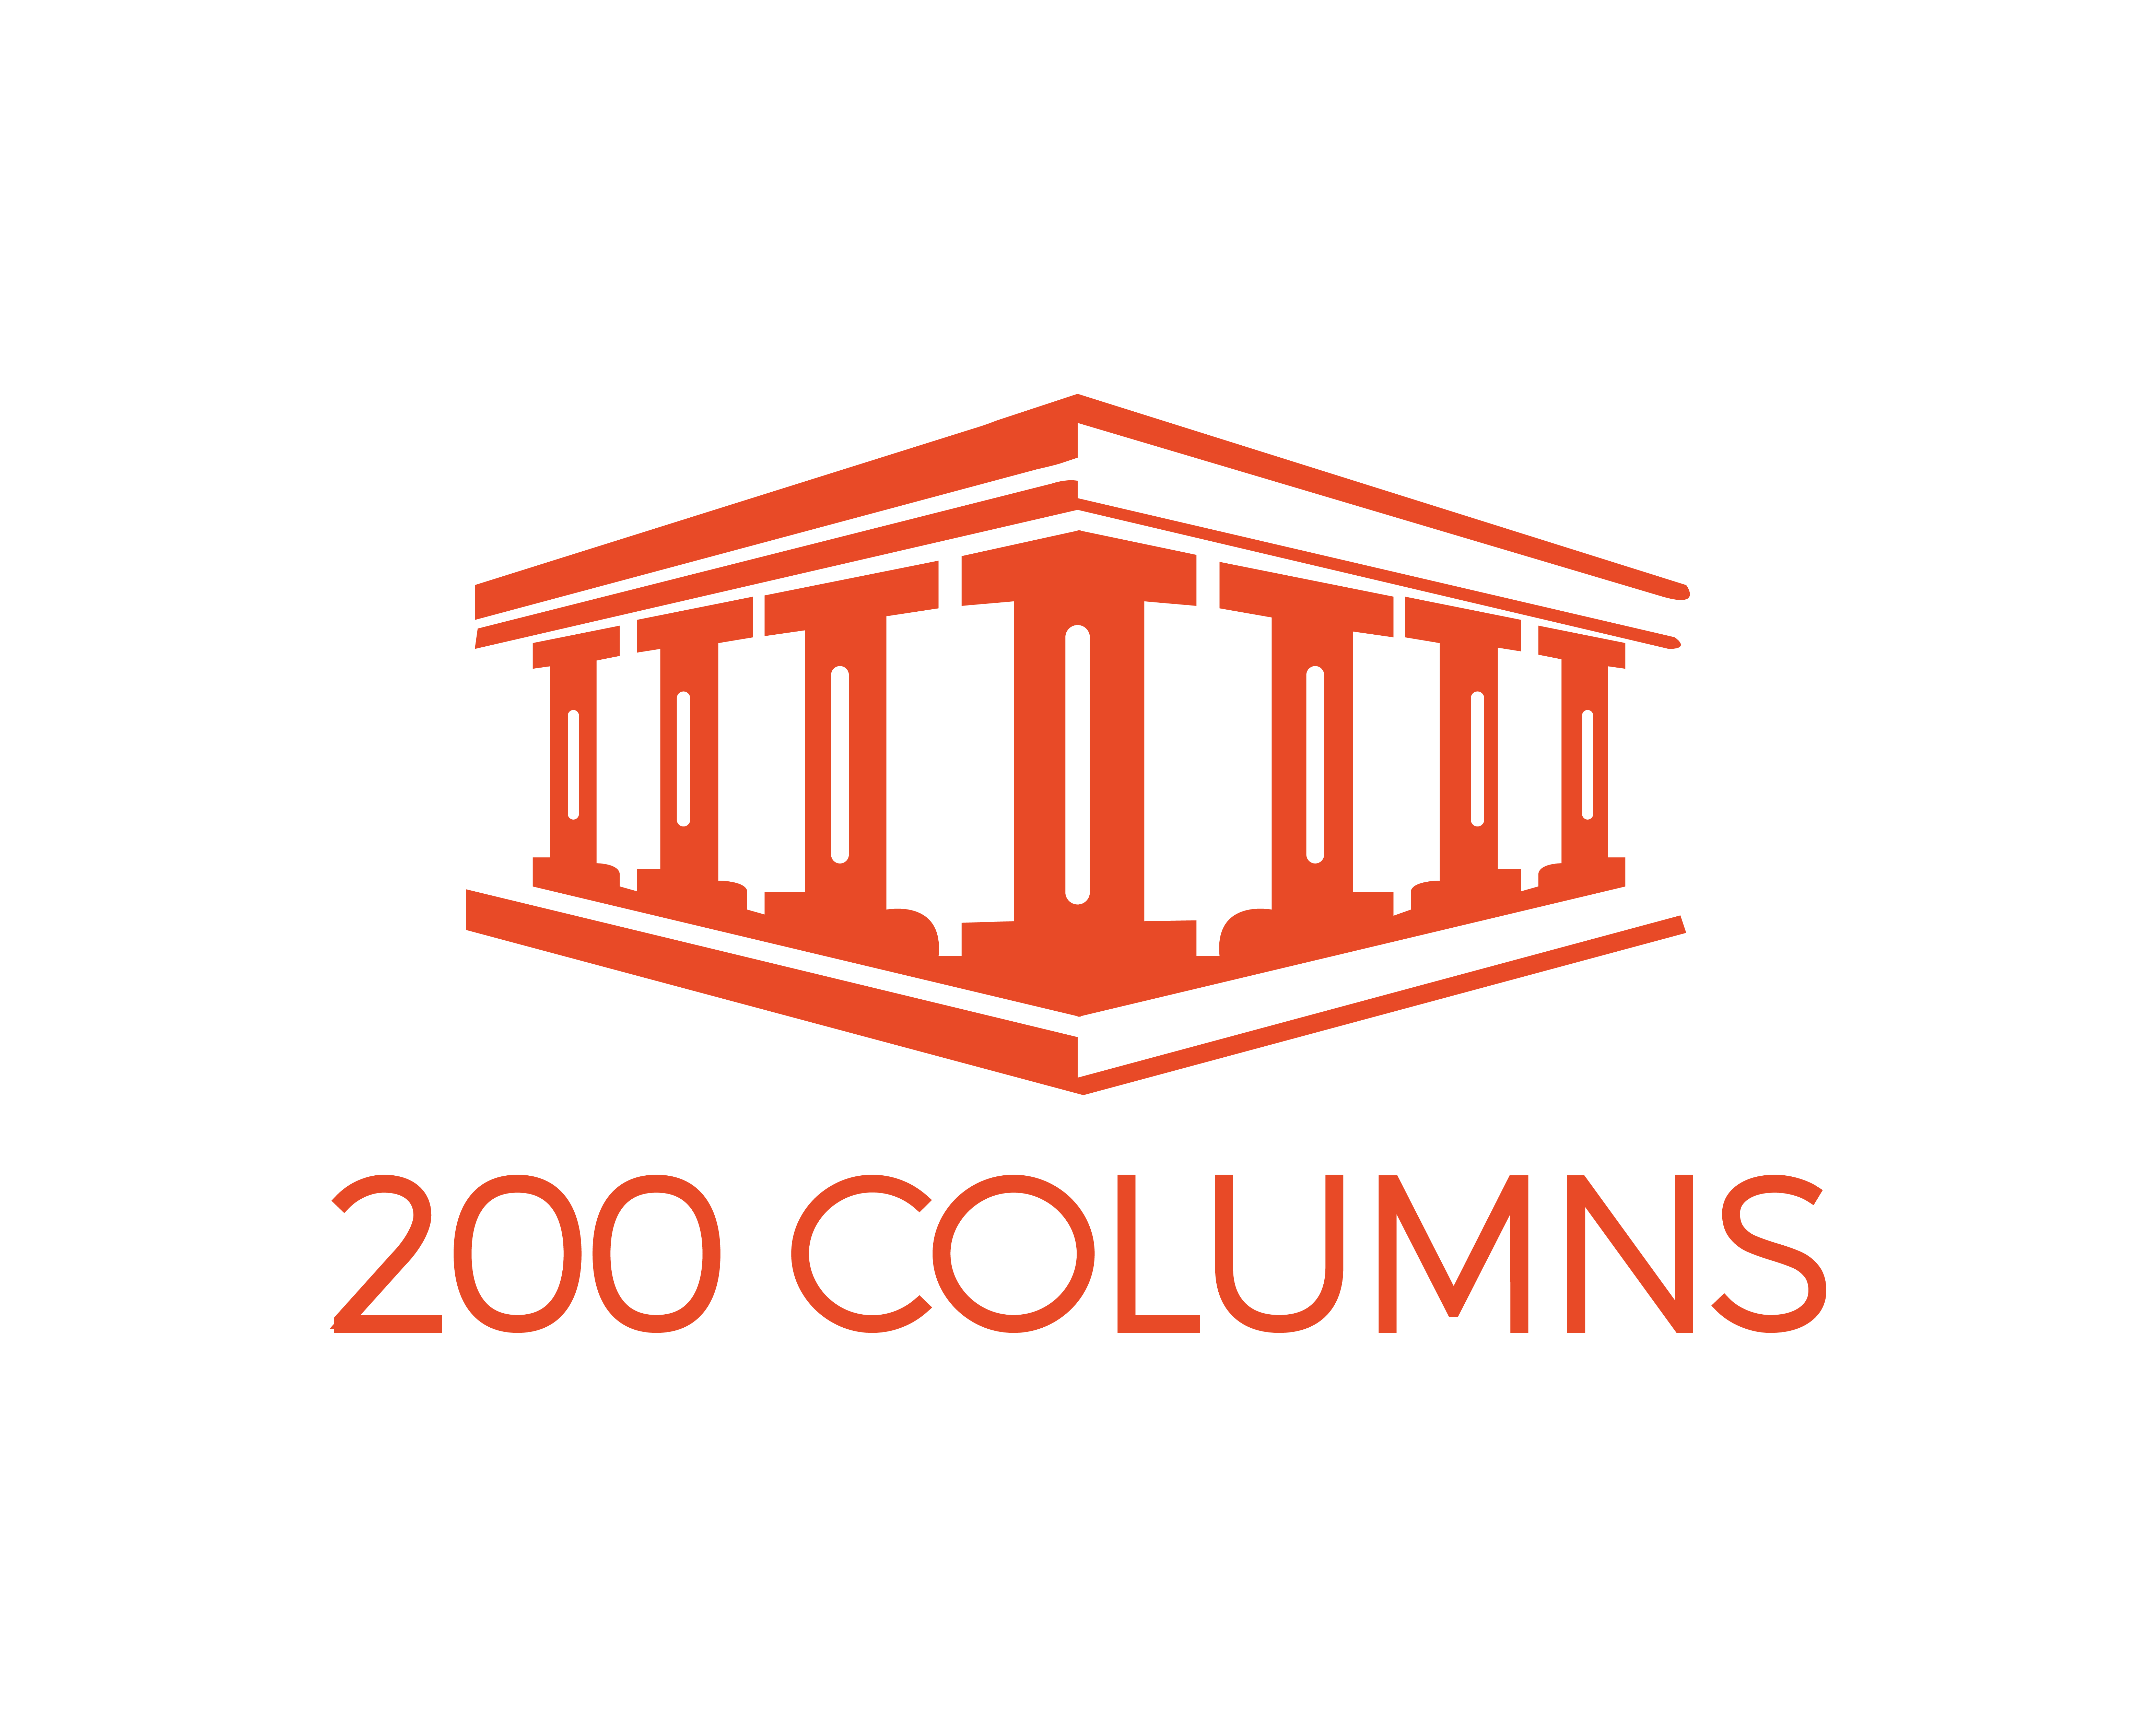 200 COLUMNS